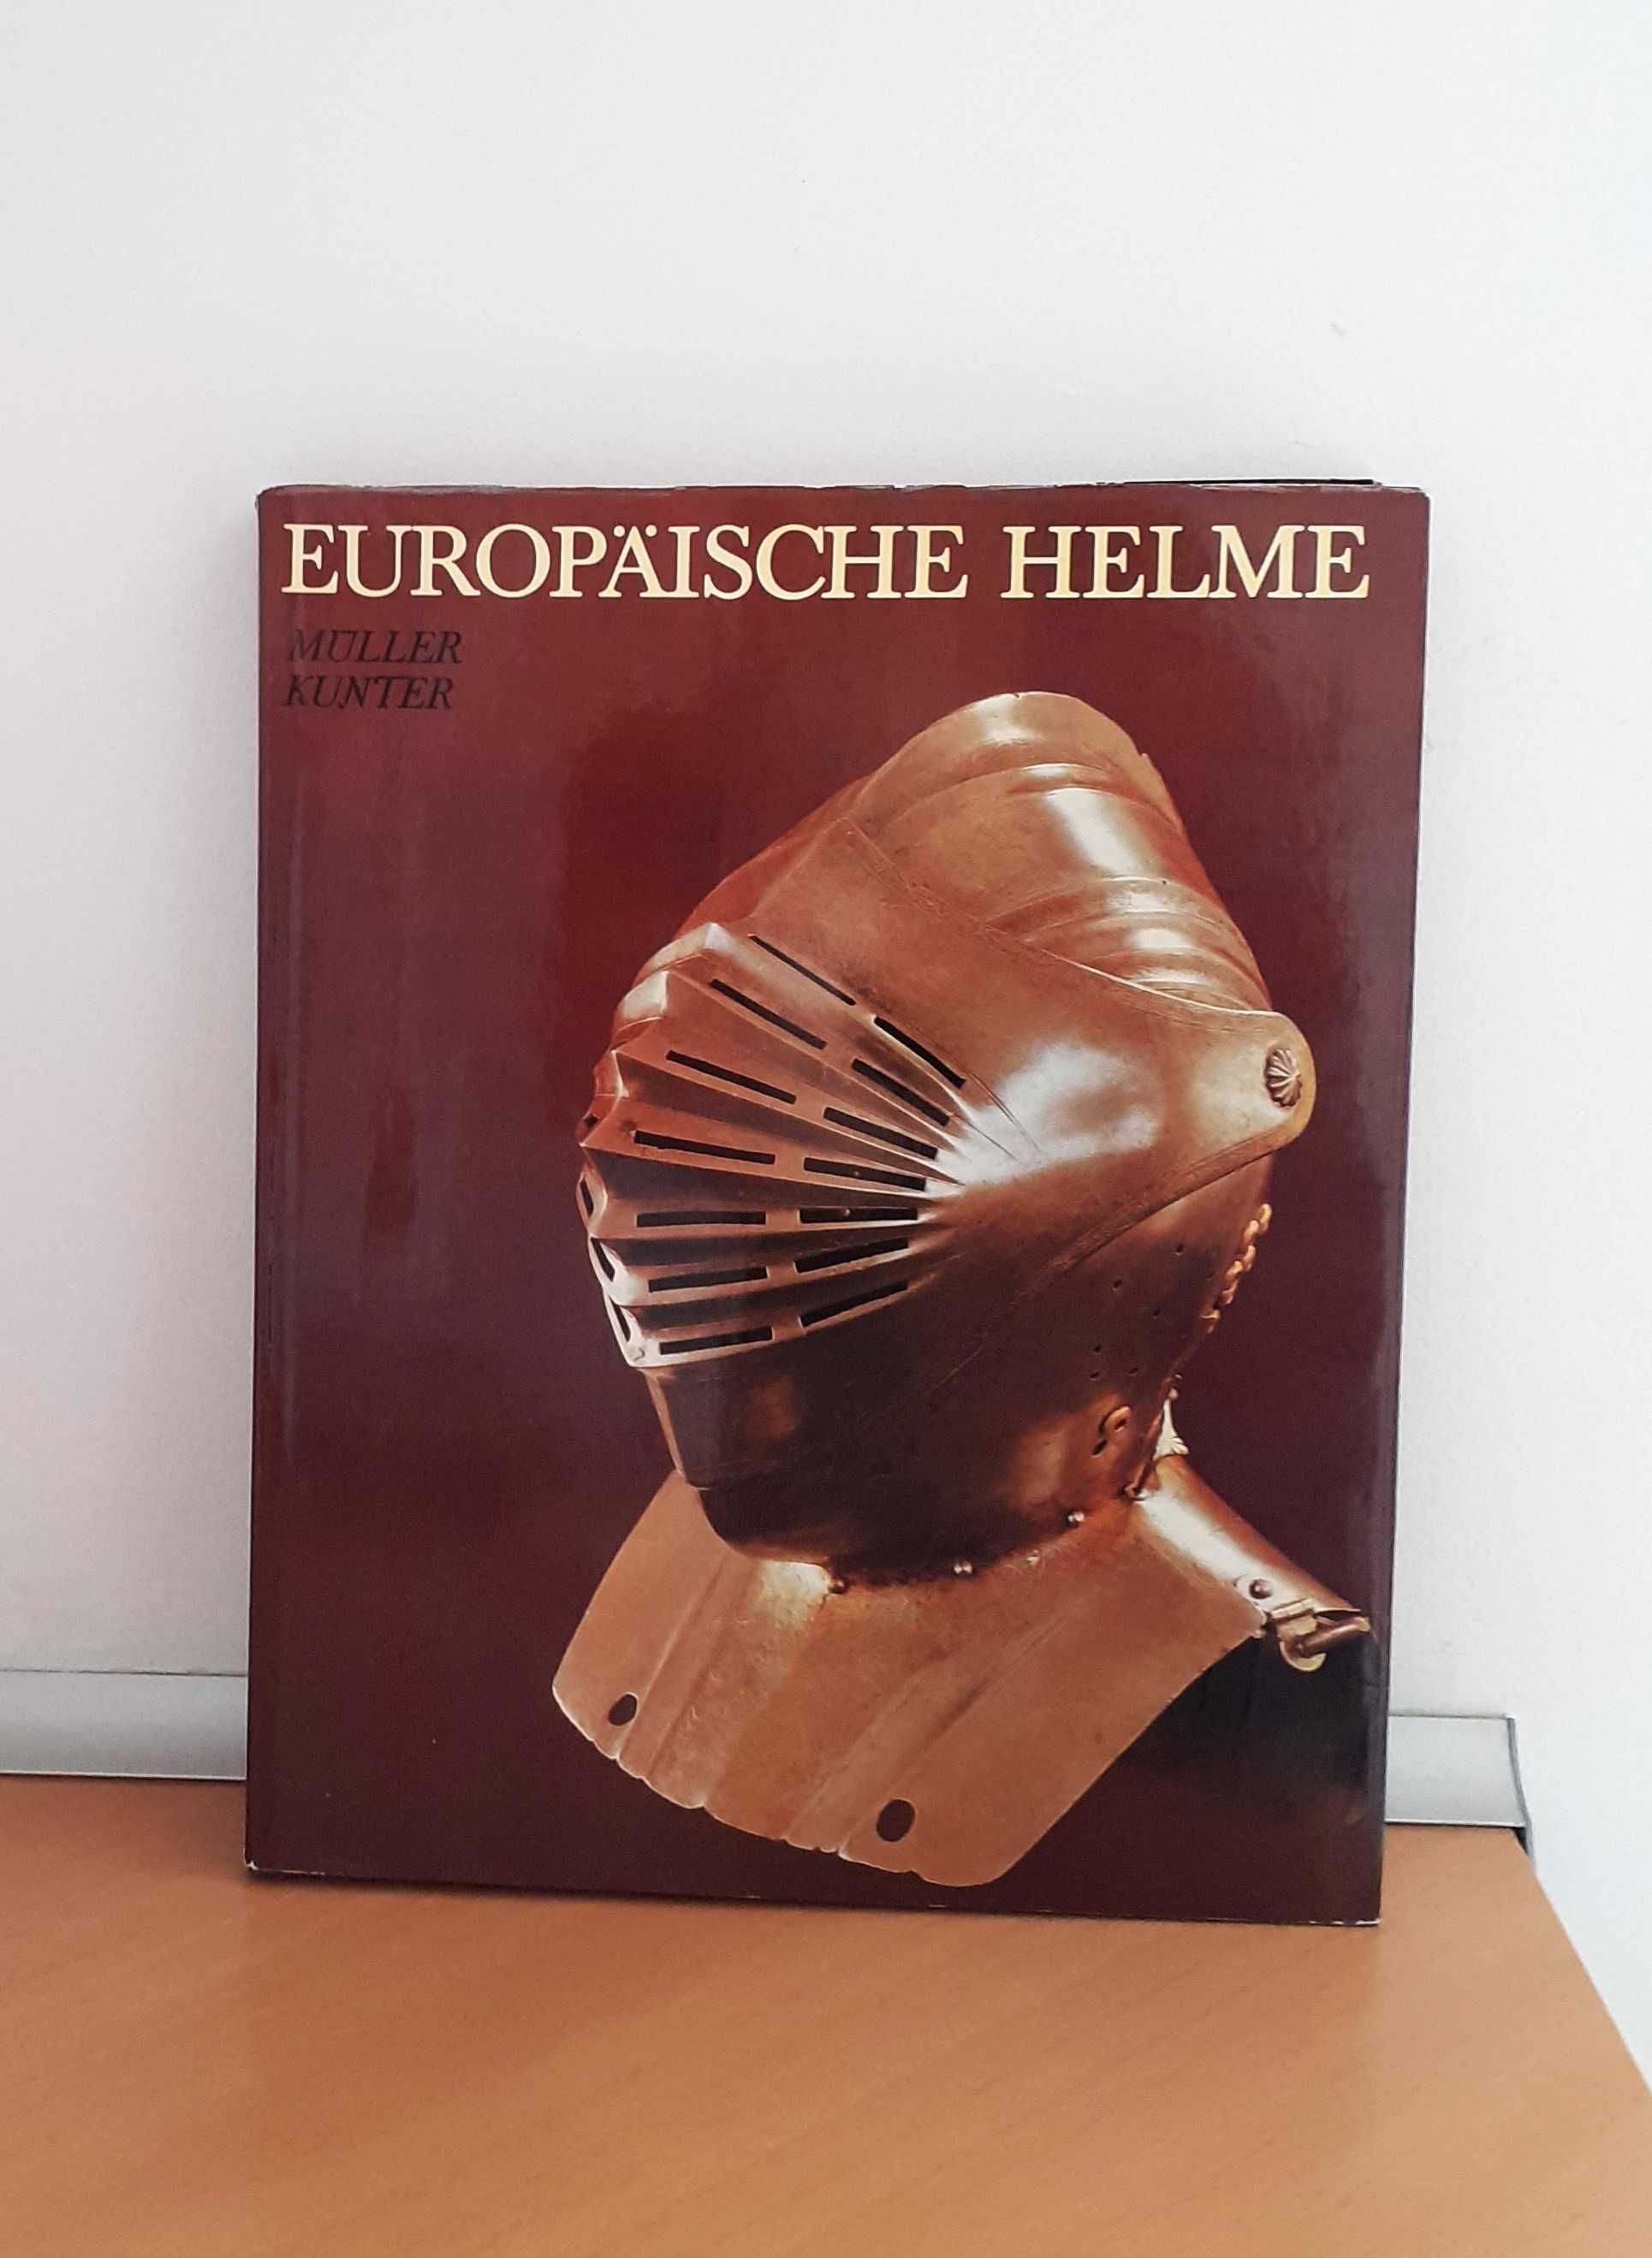 Europaische Helme - Heinrich Muller, Fritz Kunter (Hełmy europejskie)